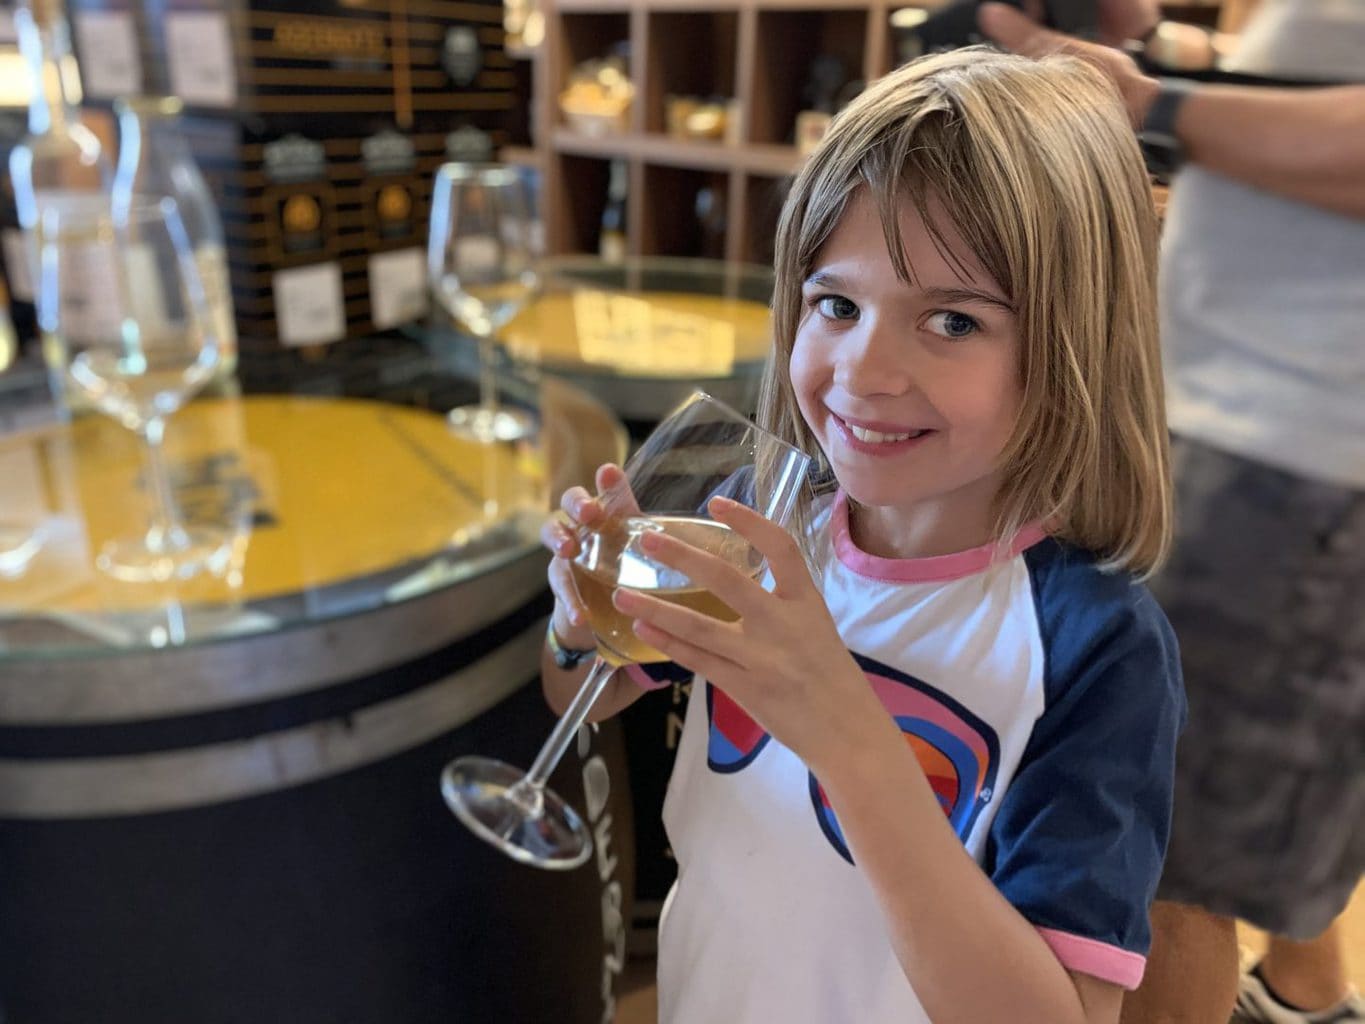 Wine tasting at a Vineyard in Spain with Kids – Adernats Cellar